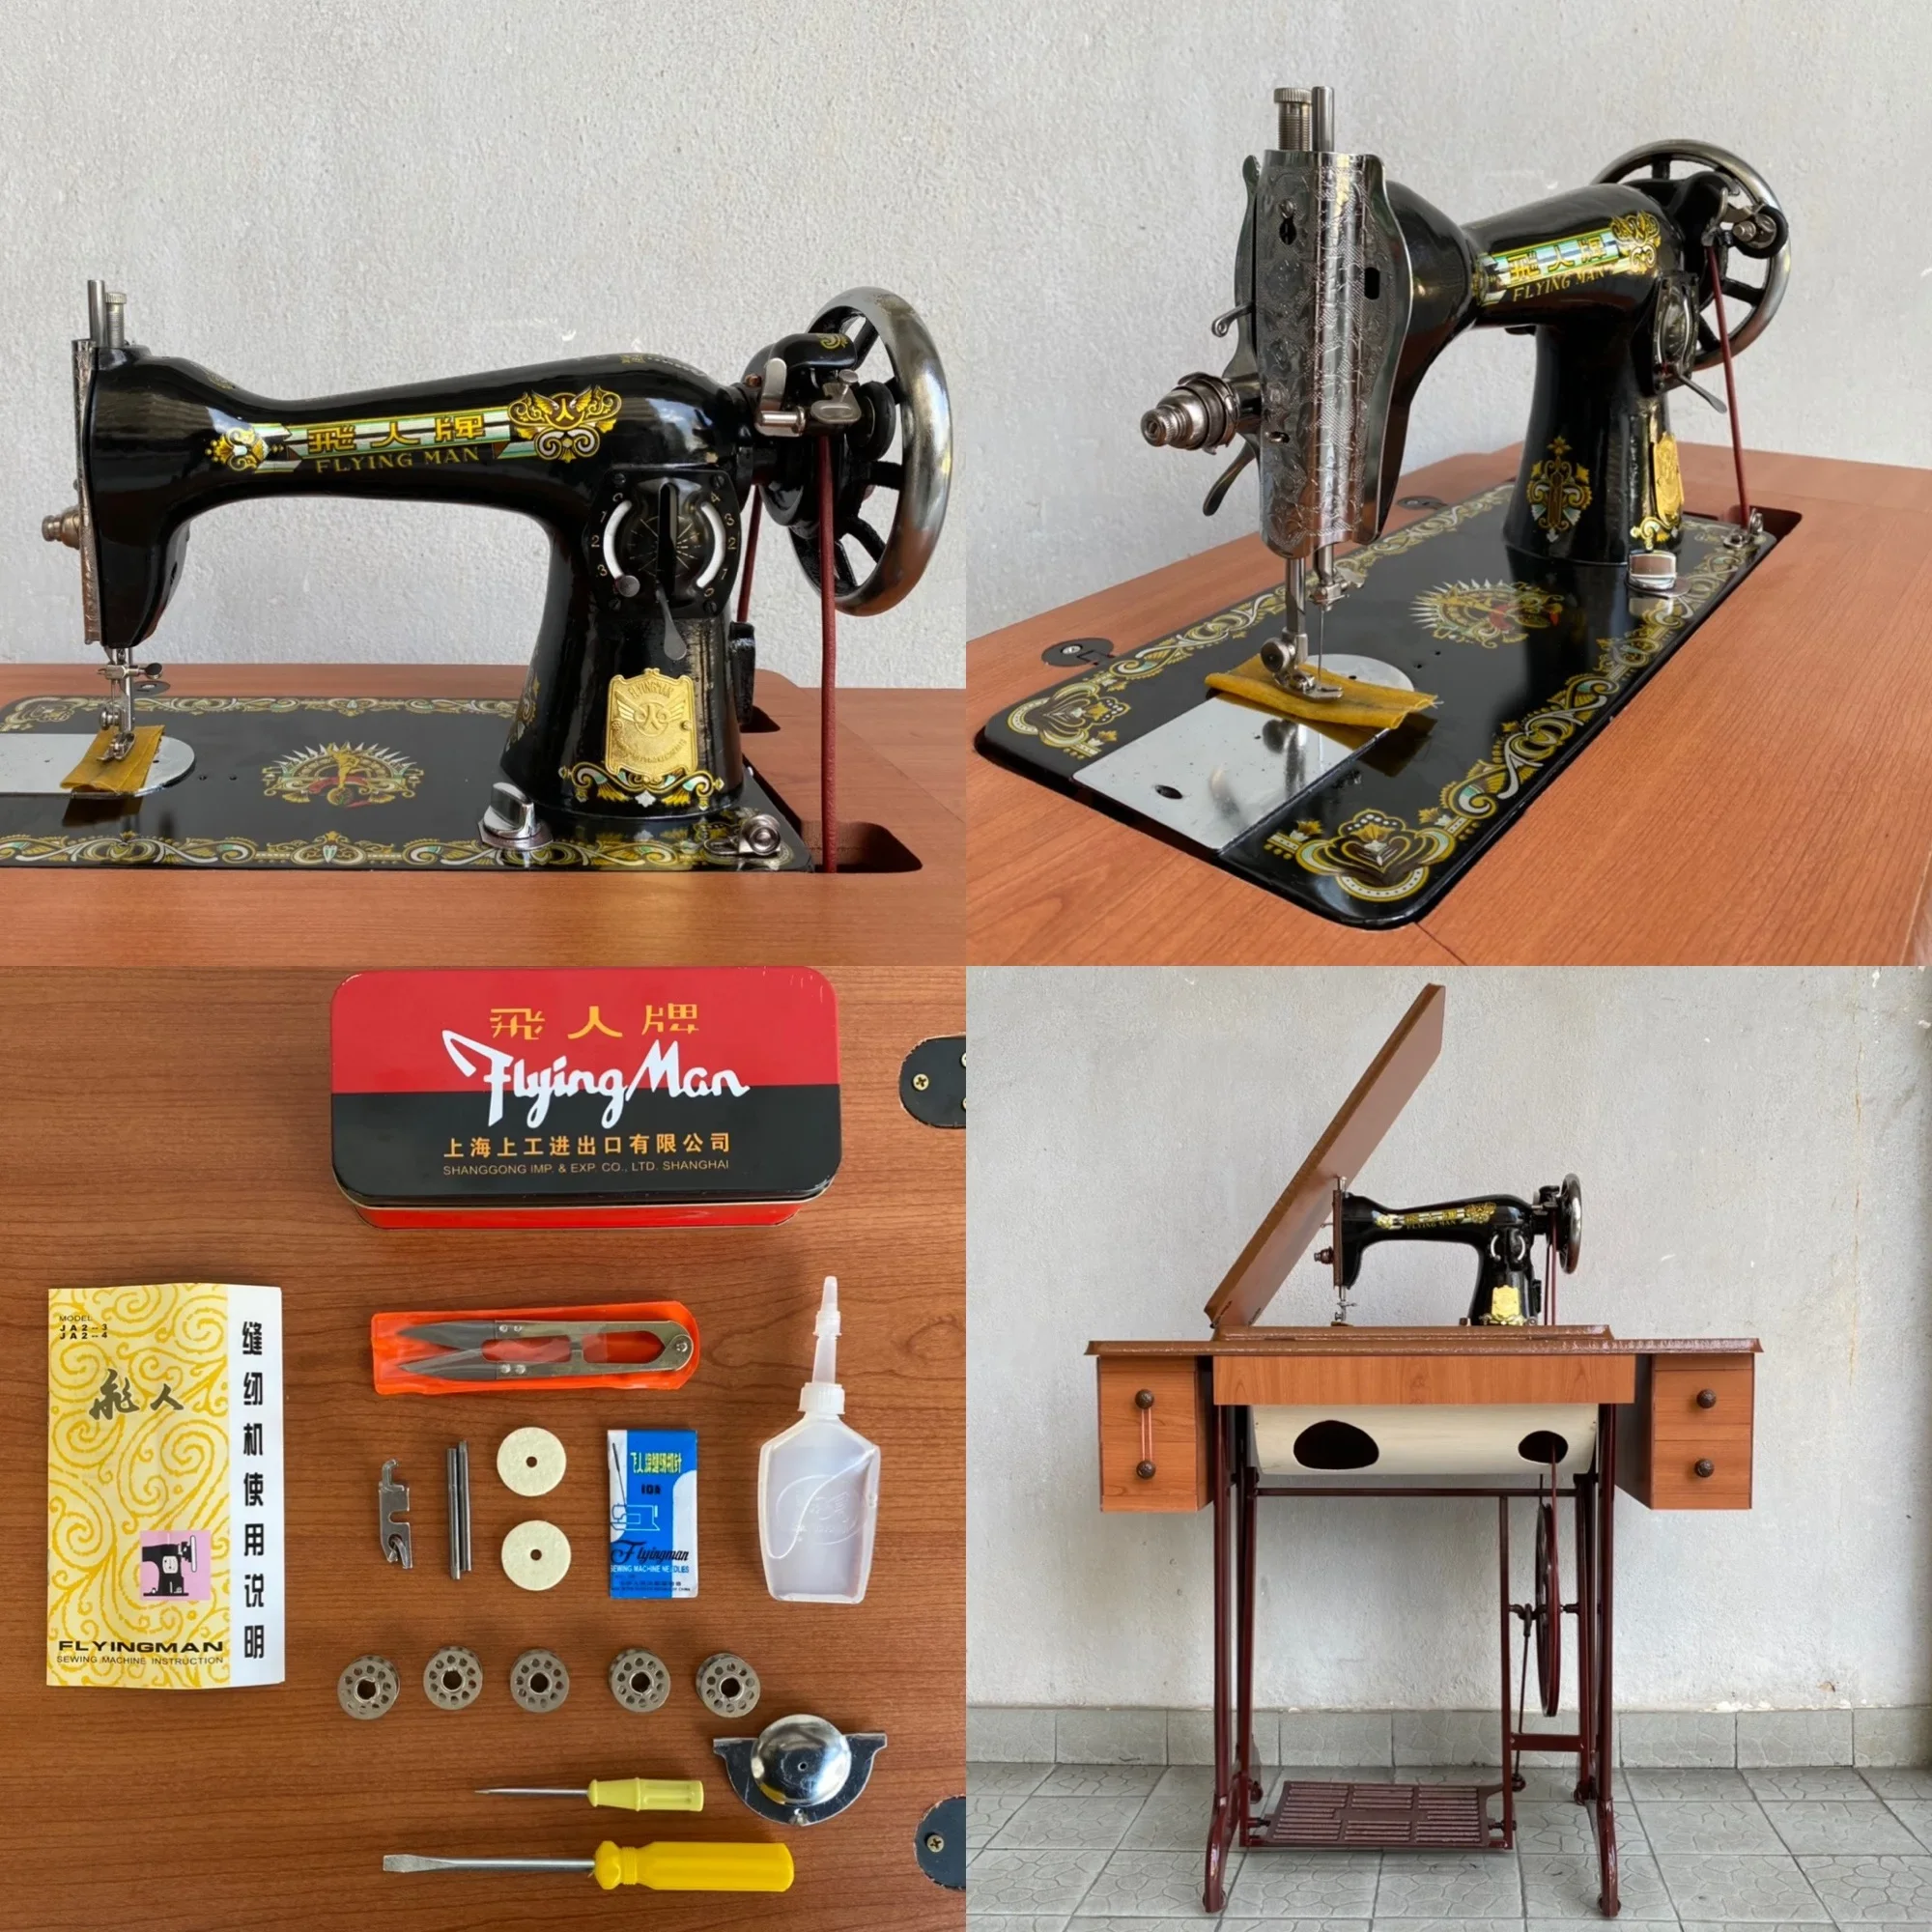 Mesin Jahit Kepala Hitam FLYINGMAN Original (Kepala,Meja,Kaki) / Original FLYINGMAN Vintage Black Head Sewing Machine